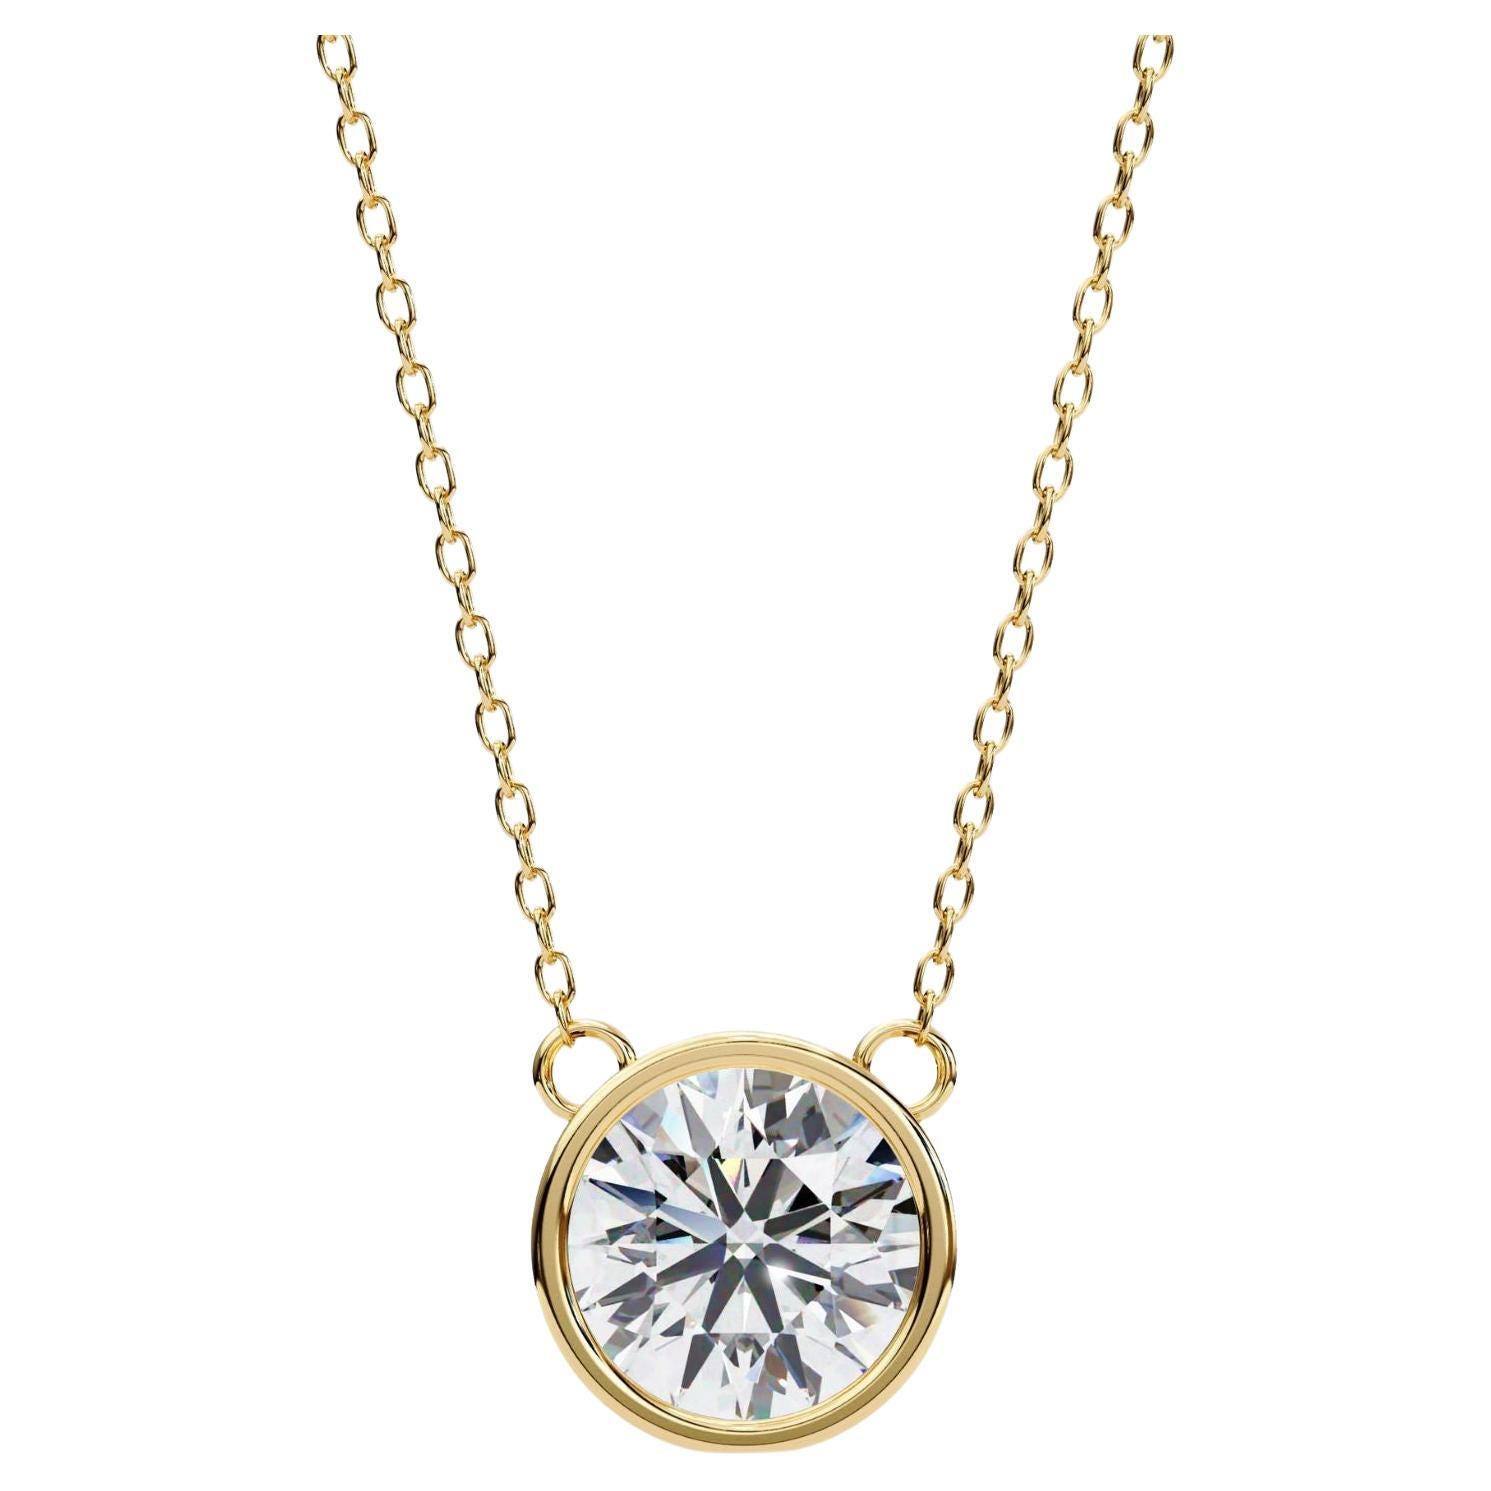 Collier pendentif solitaire en or massif 14 carats serti d'un diamant rond de 1/2 carat, serti clos